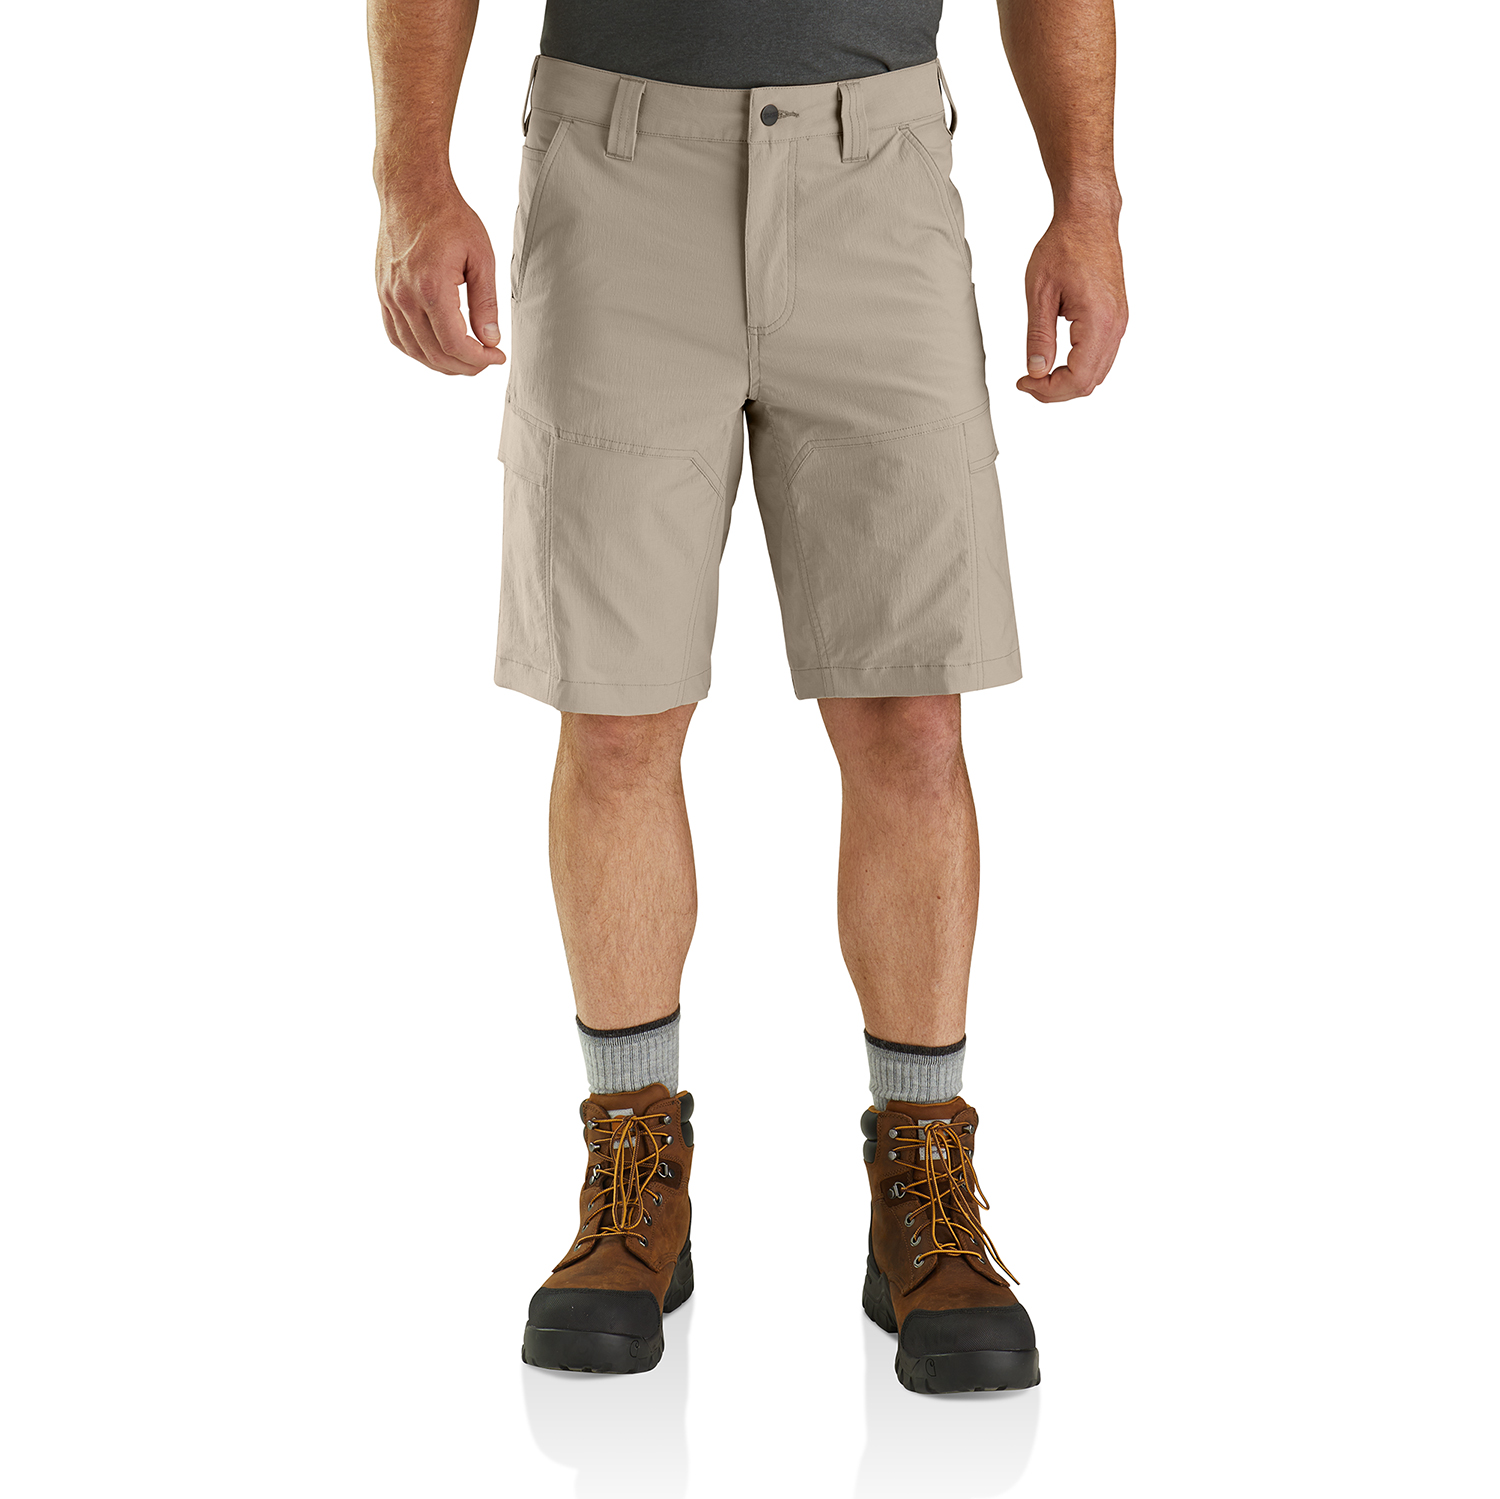 Men's Overalls Cargo Shorts Convertible Shorts Zipper Trousers Full Pants Trunks 